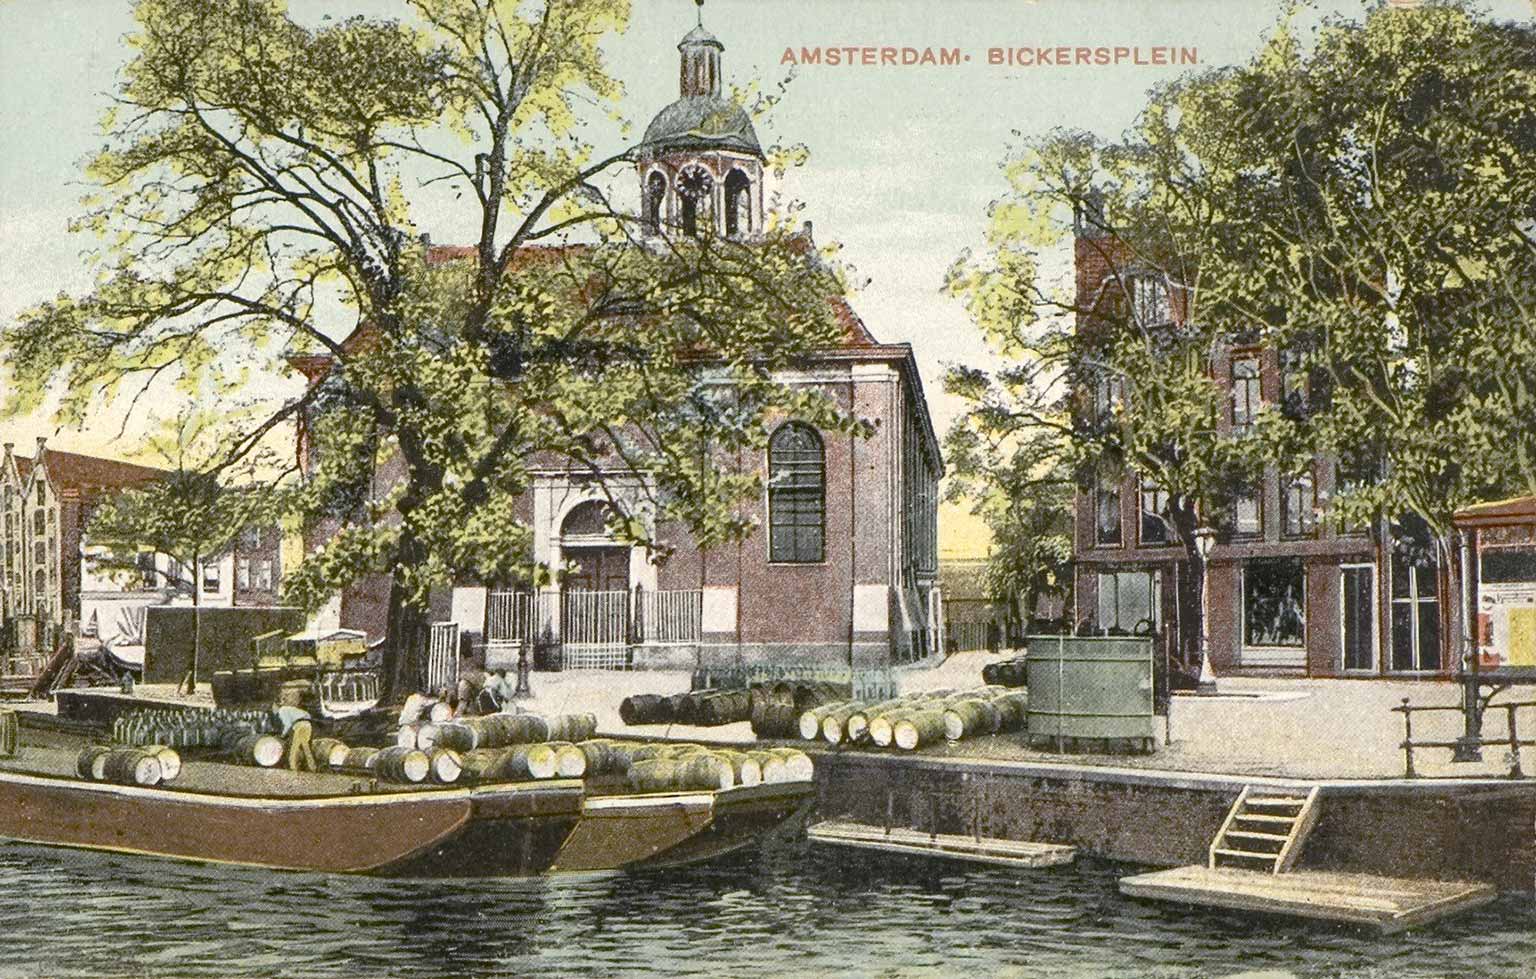 Eilandskerk op Bickerseiland, Amsterdam, ansichtkaart uit 1920